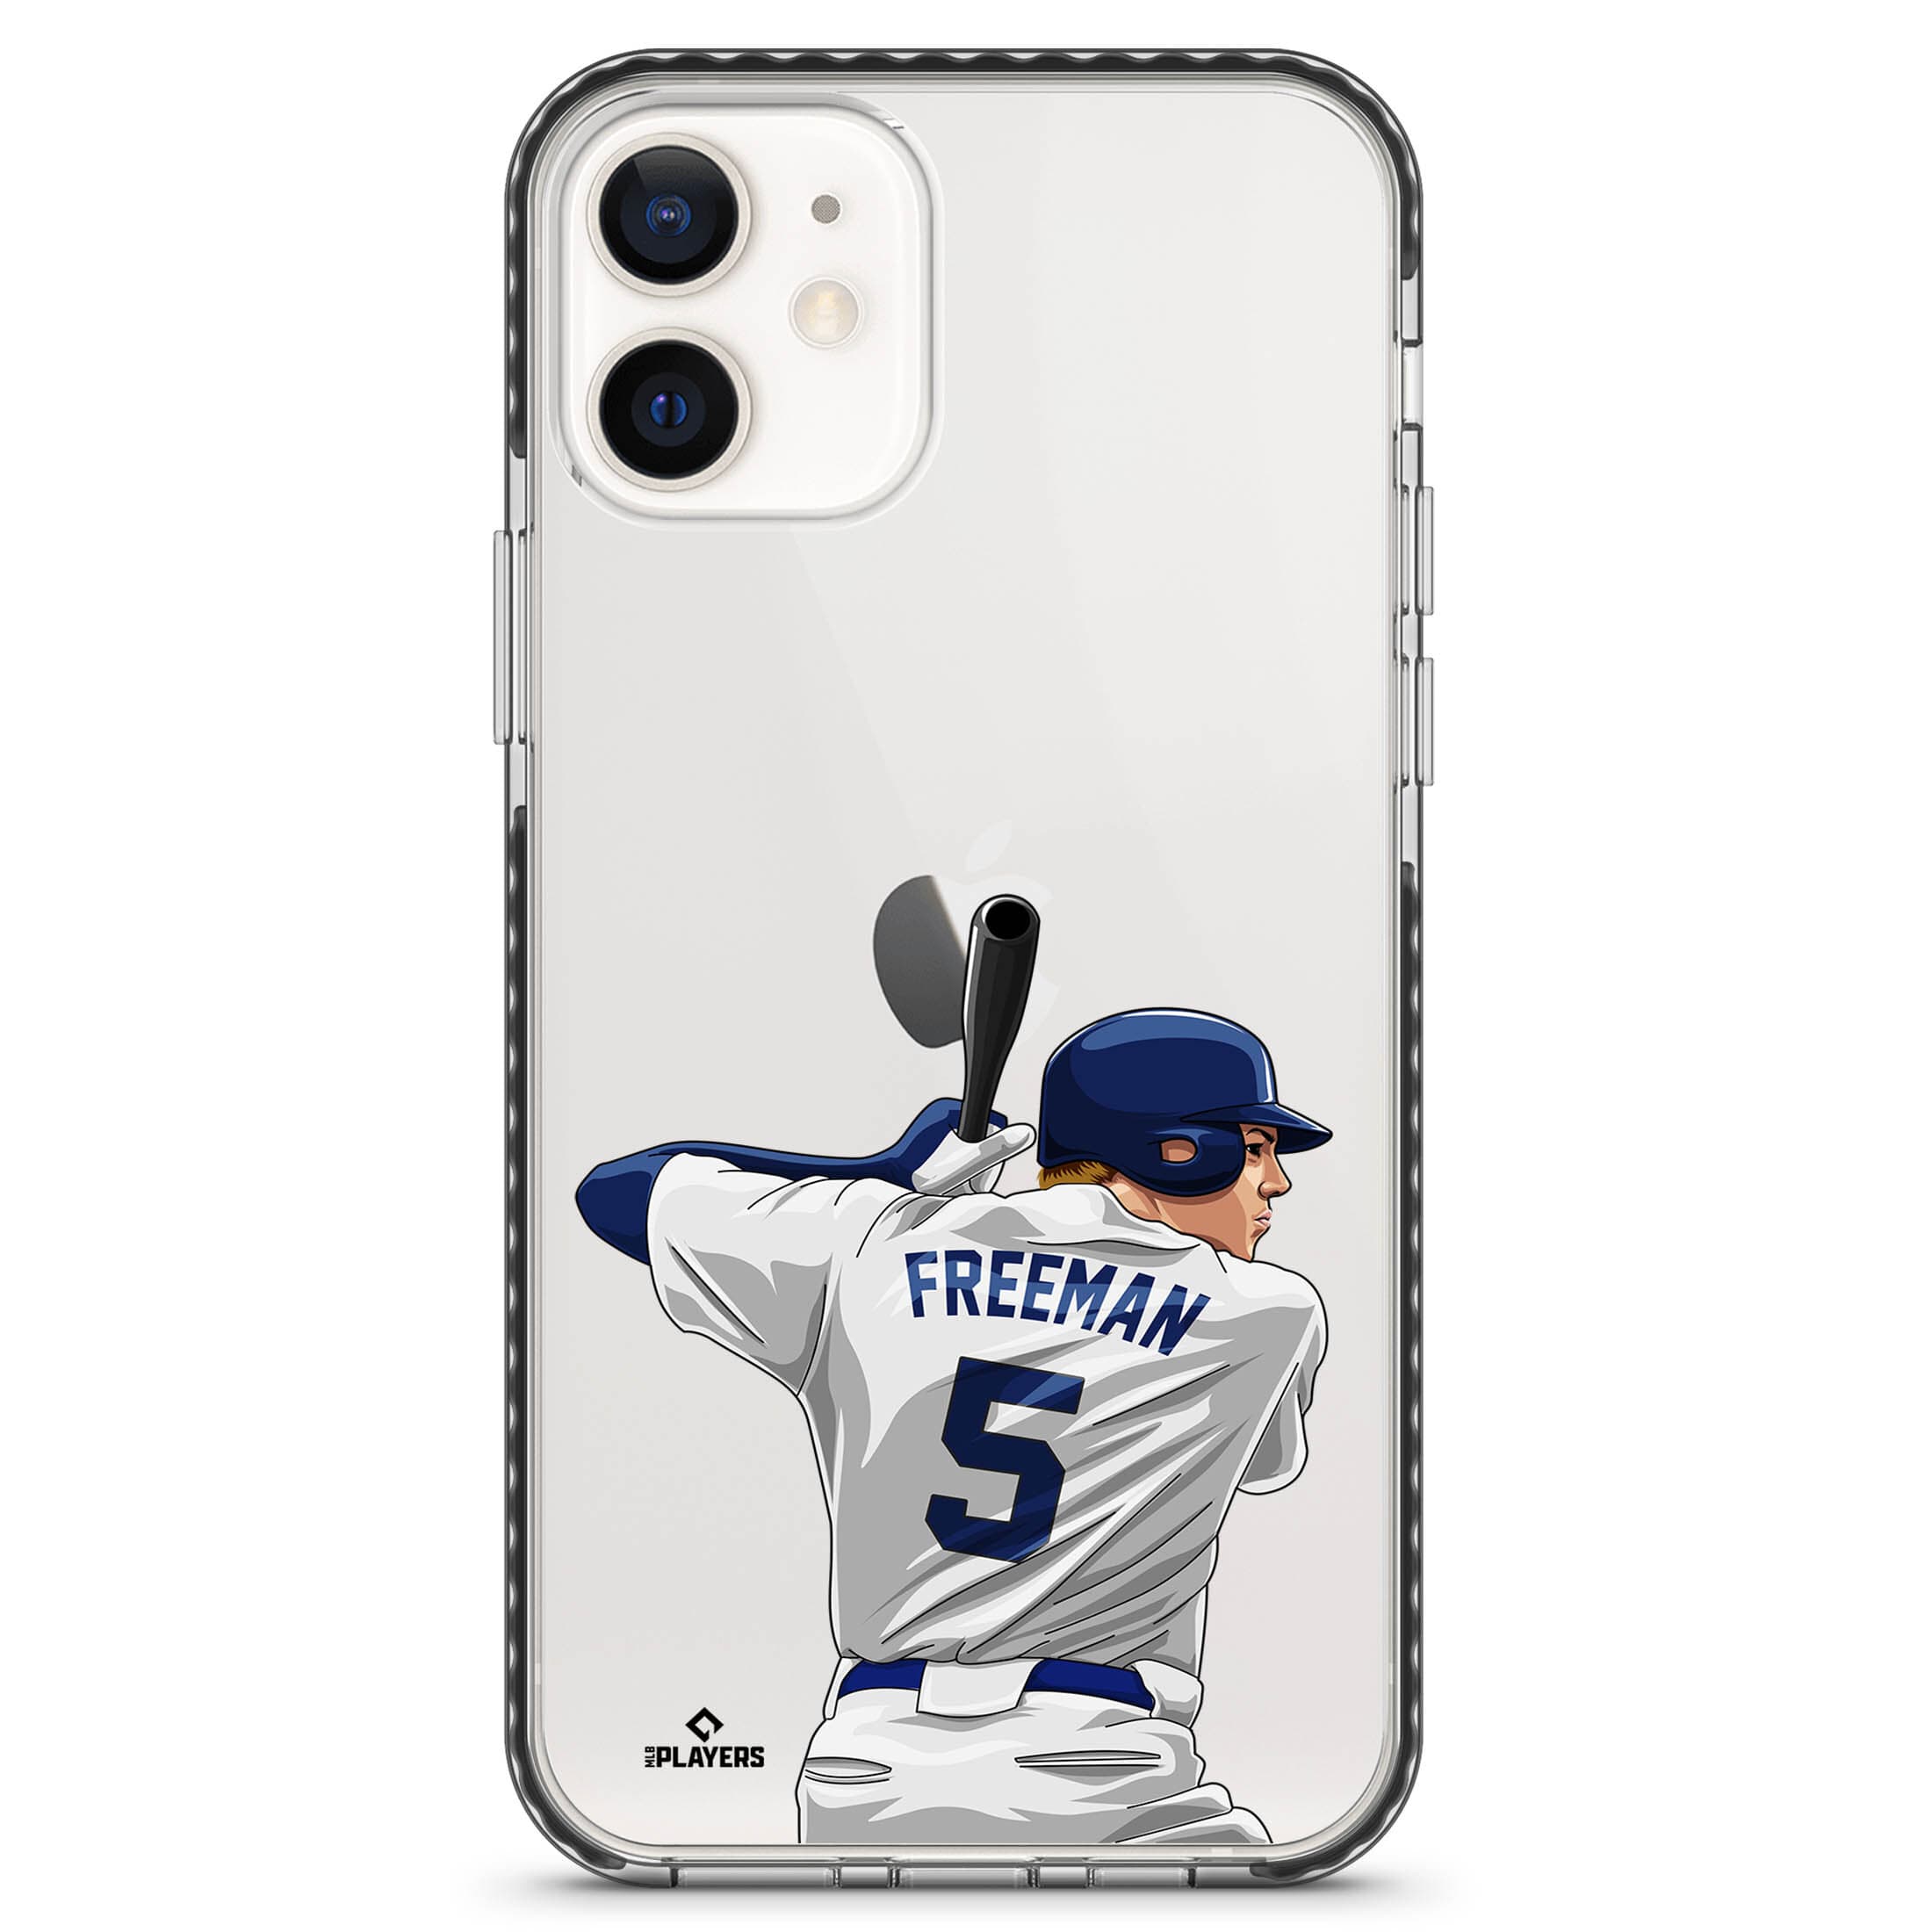 Freeman Clear Series 2.0 Phone Case